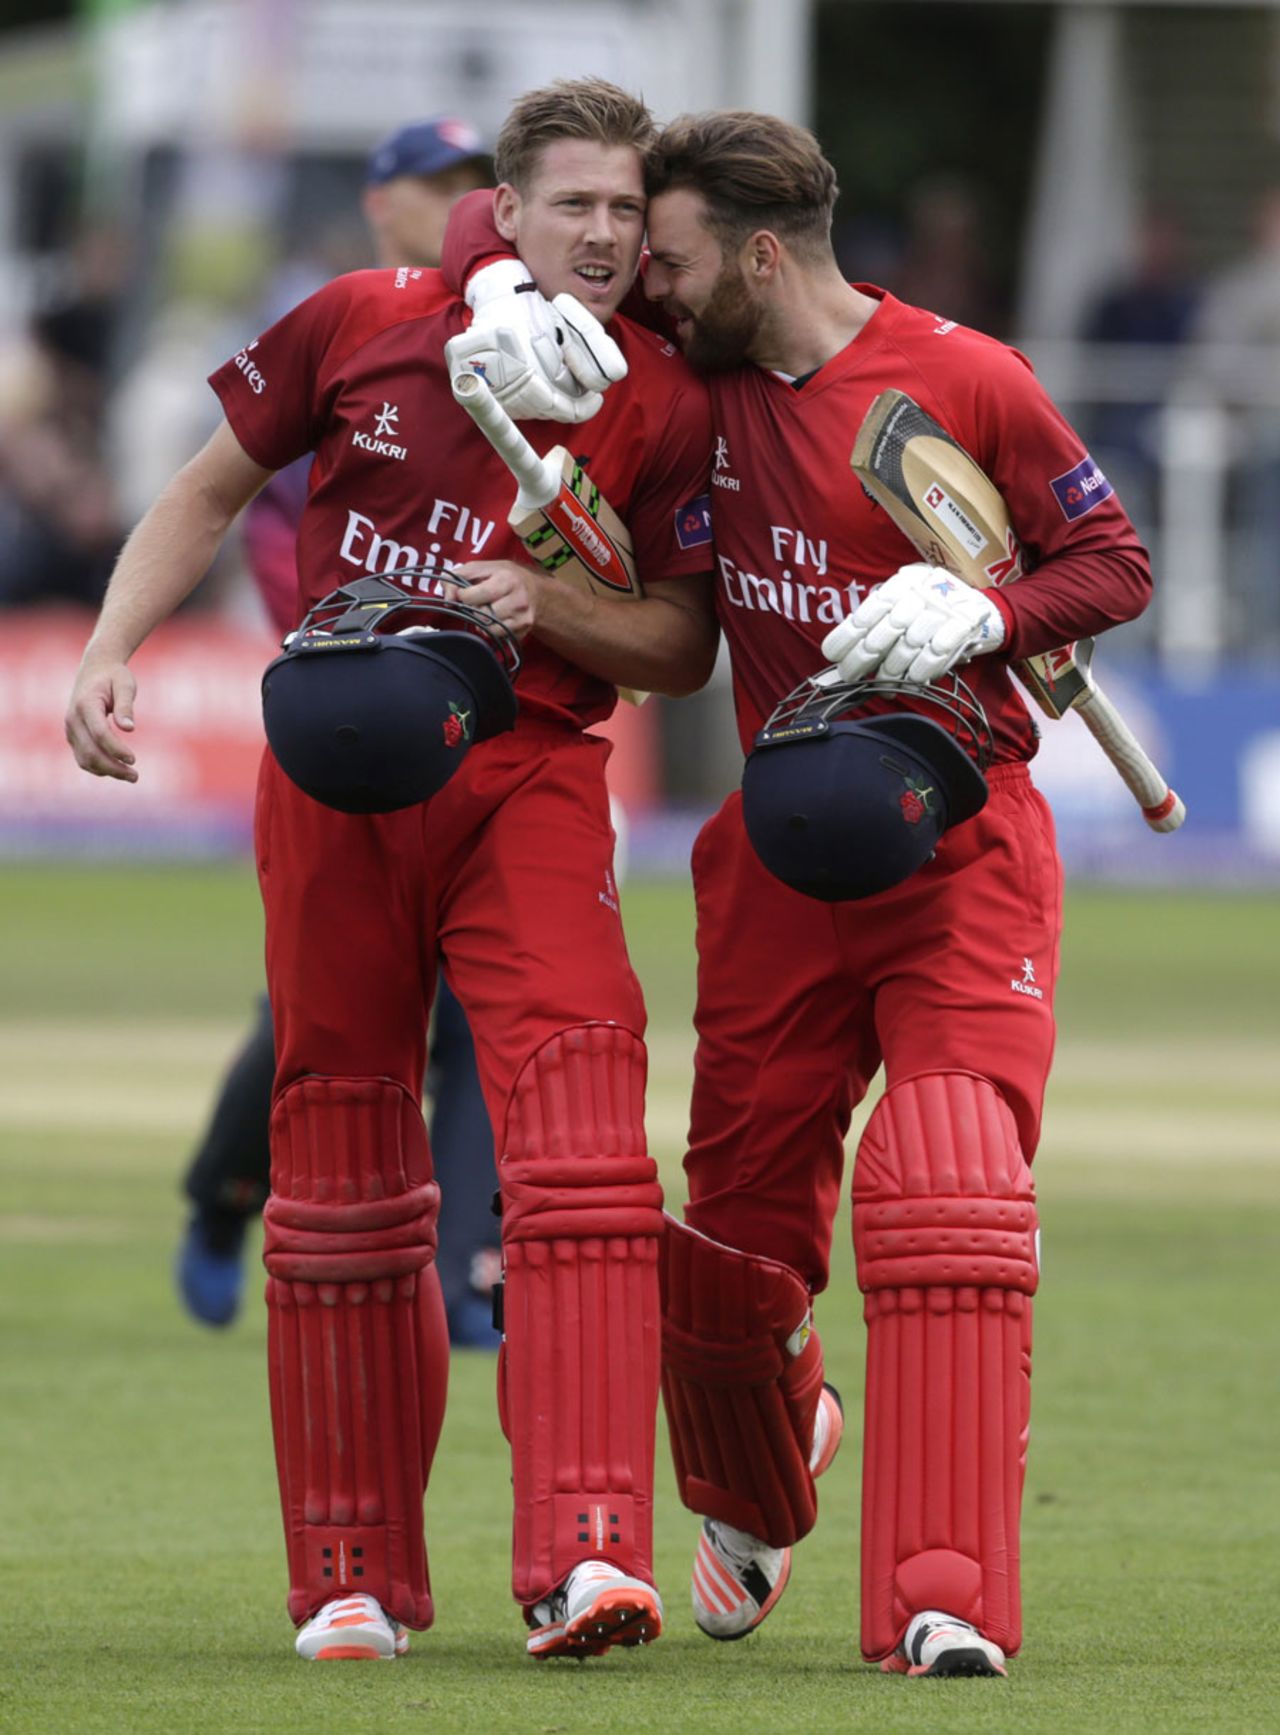 James Faulkner kept his nerve to send Lancashire through on fewer wickets lost, Kent v Lancashire, NatWest T20 Blast quarter-final, Canterbury, August 15, 2015